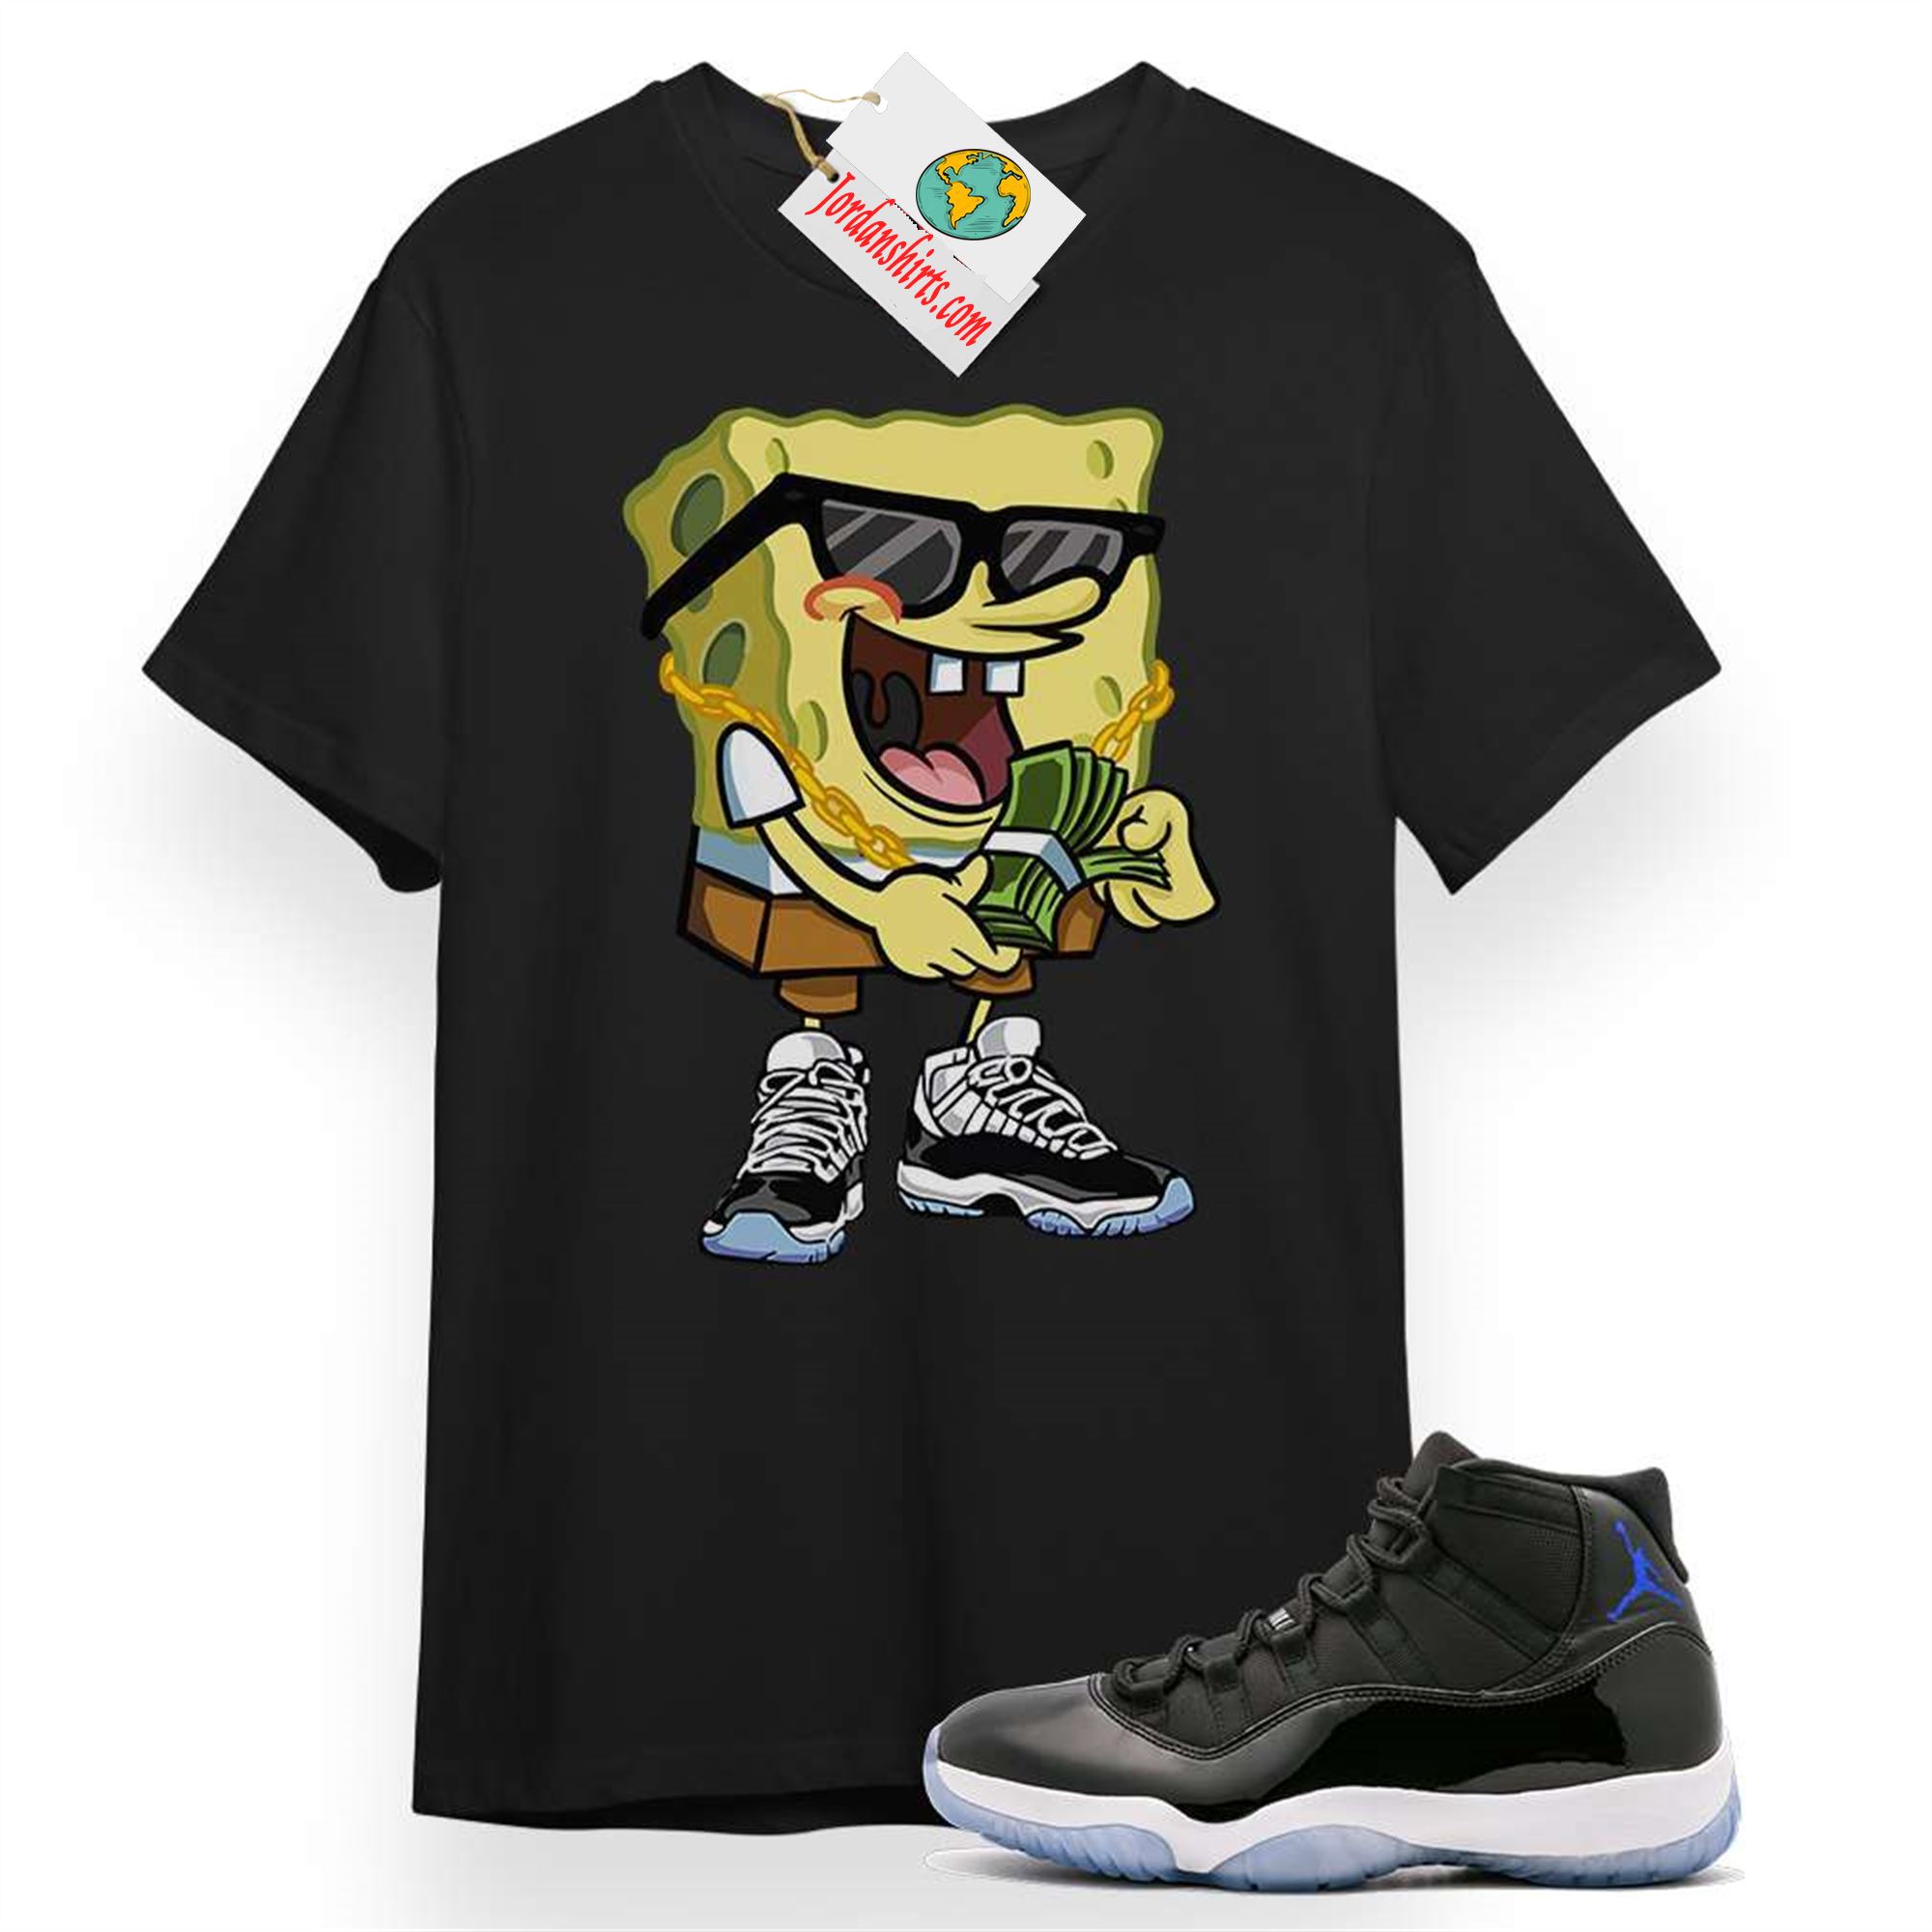 Jordan 11 Shirt, Spongebob Black T-shirt Air Jordan 11 Space Jam 11s Full Size Up To 5xl